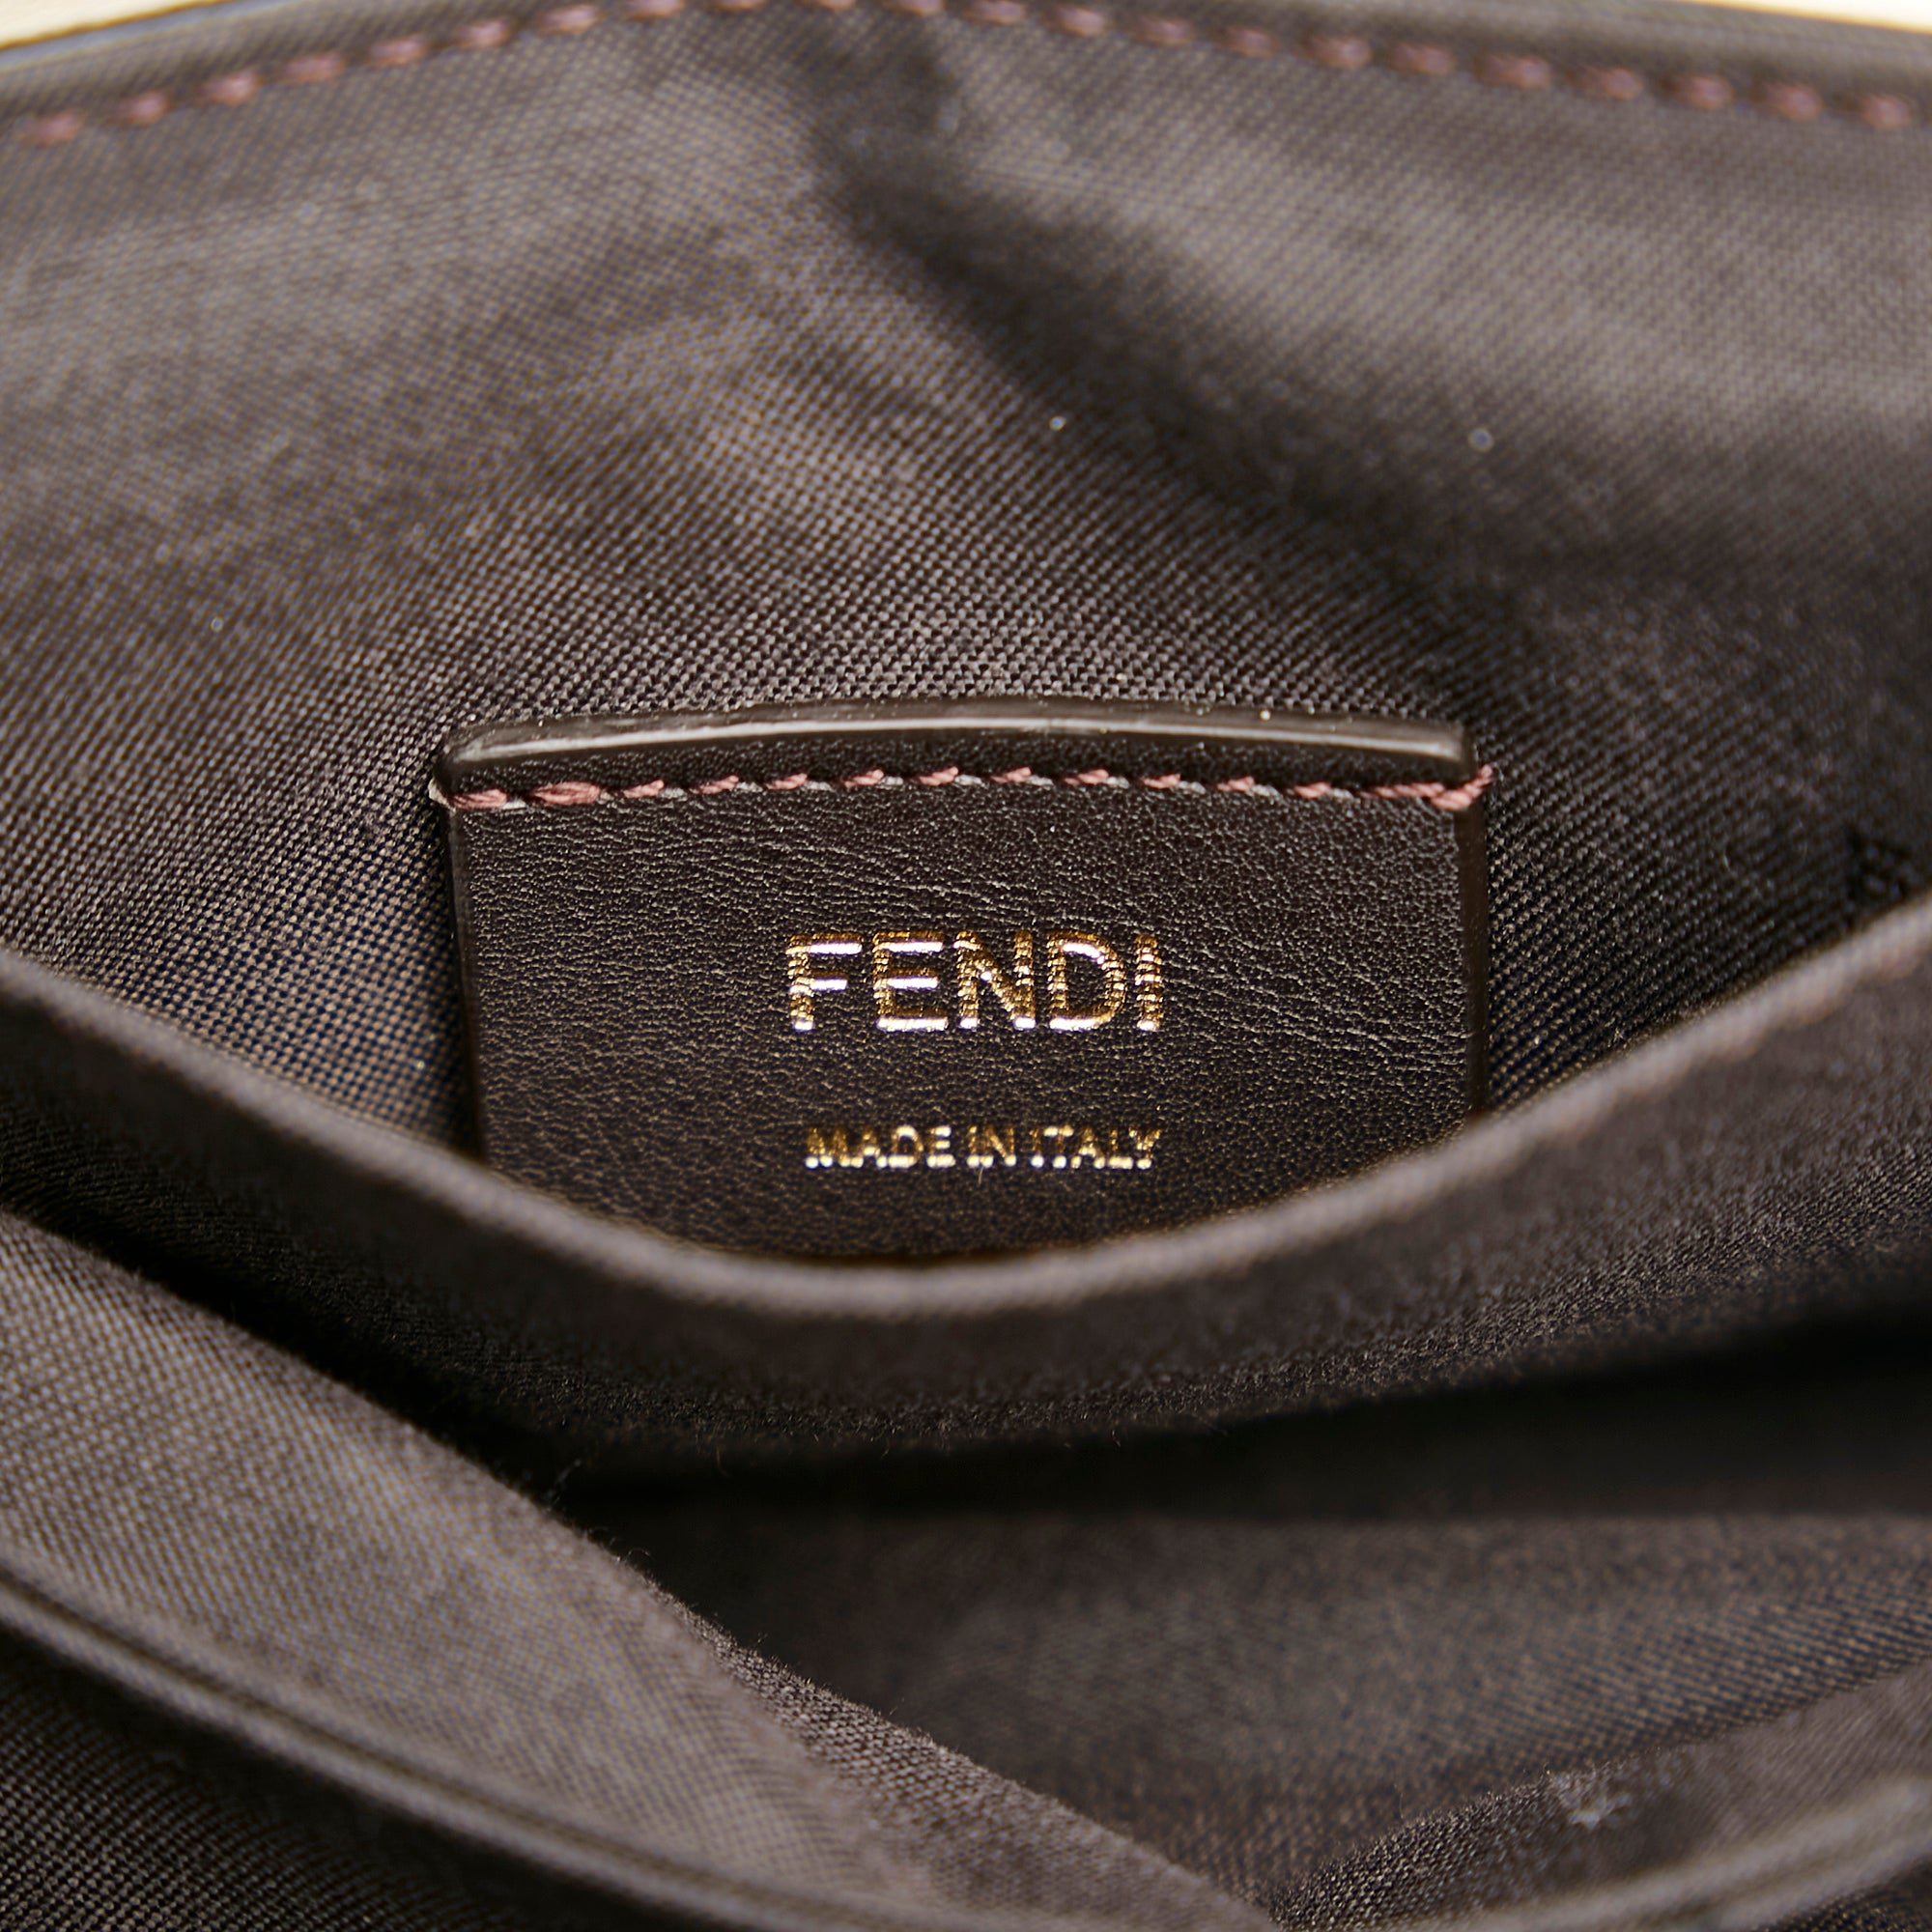 Cross body bags Fendi - F is Fendi small crossbody bag - 8BS032A18BKUR